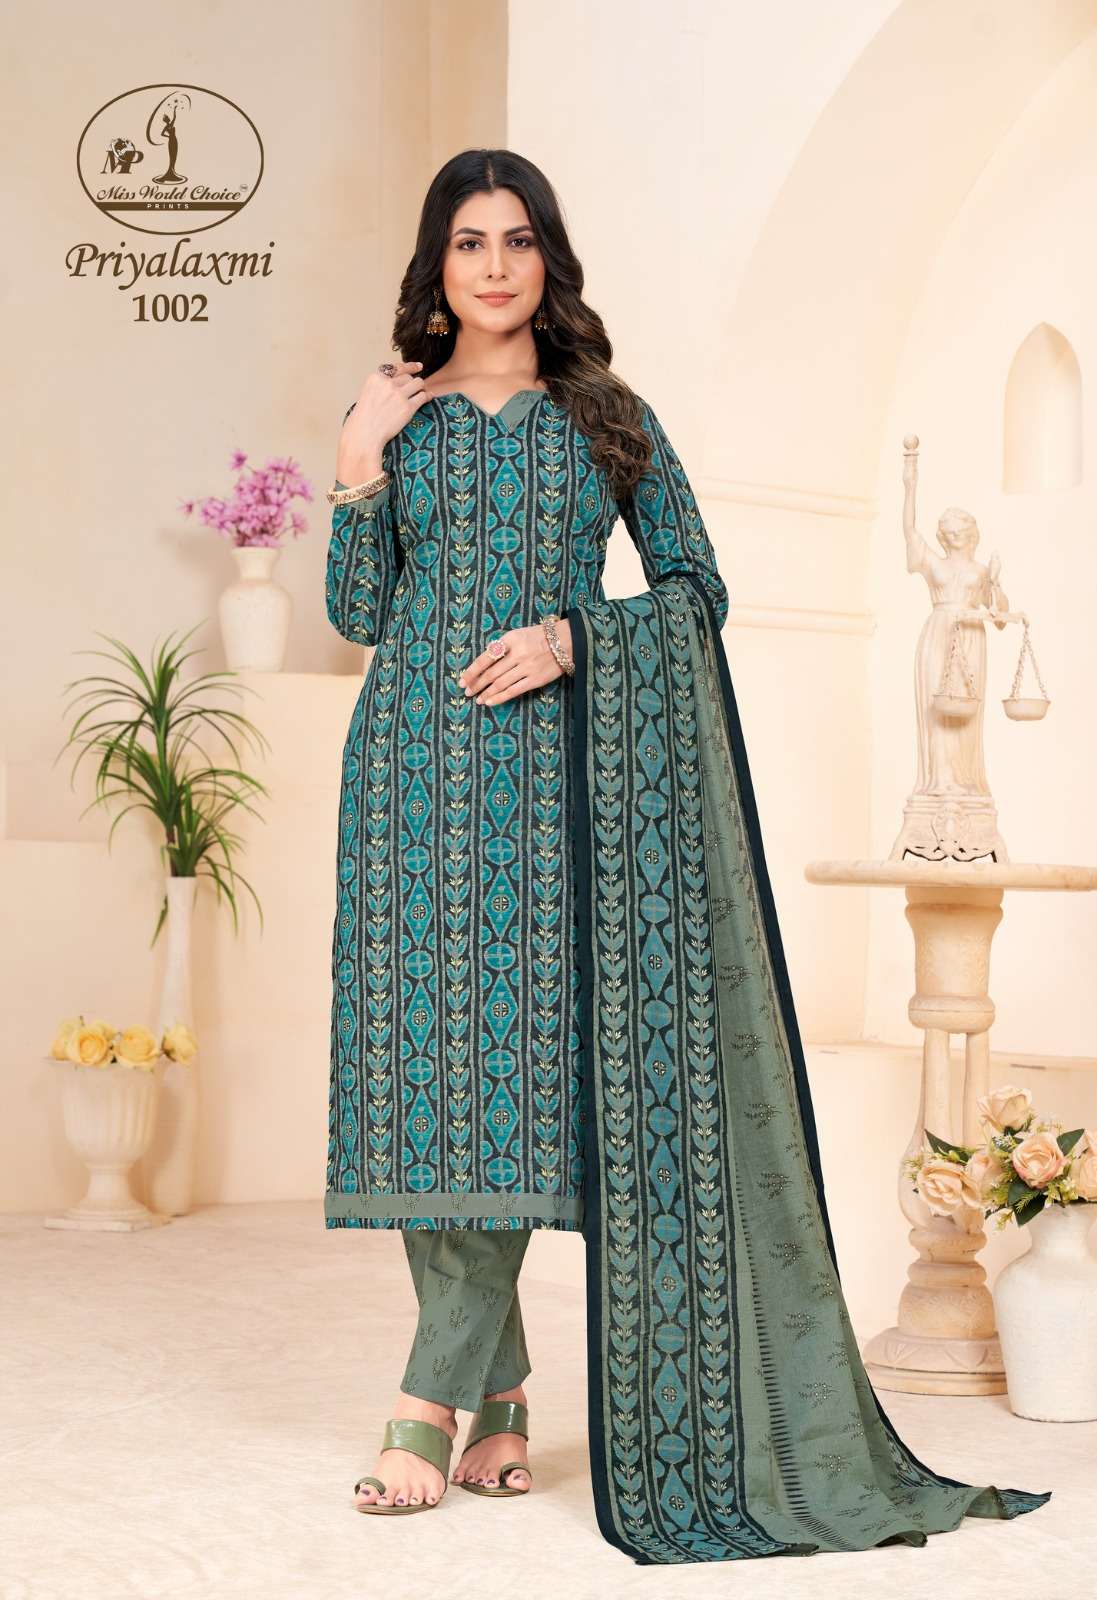 Miss Worl Choice Priyalaxmi Vol 1 Cotton Dress Material Wholesale catalog